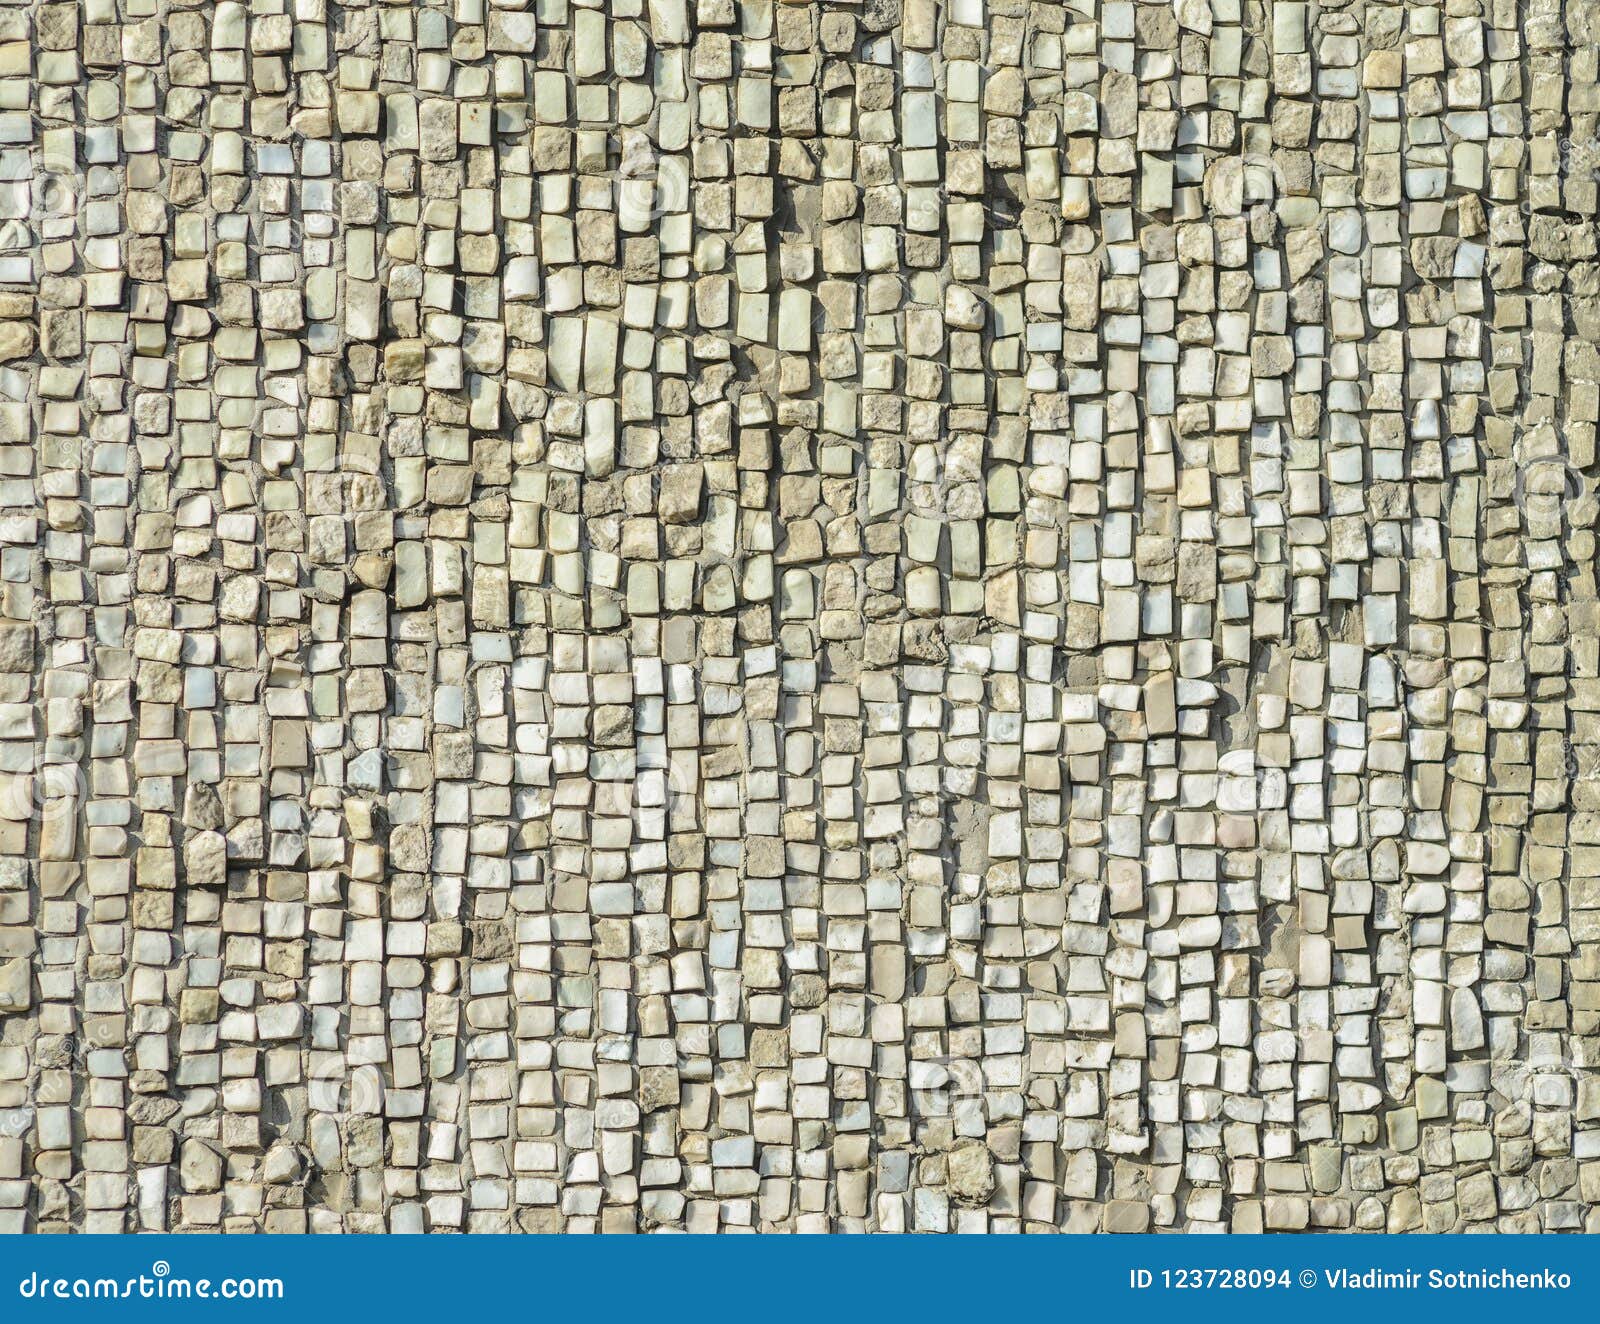 Stone Mosaic Texture Stock Photo Image Of Interior 123728094